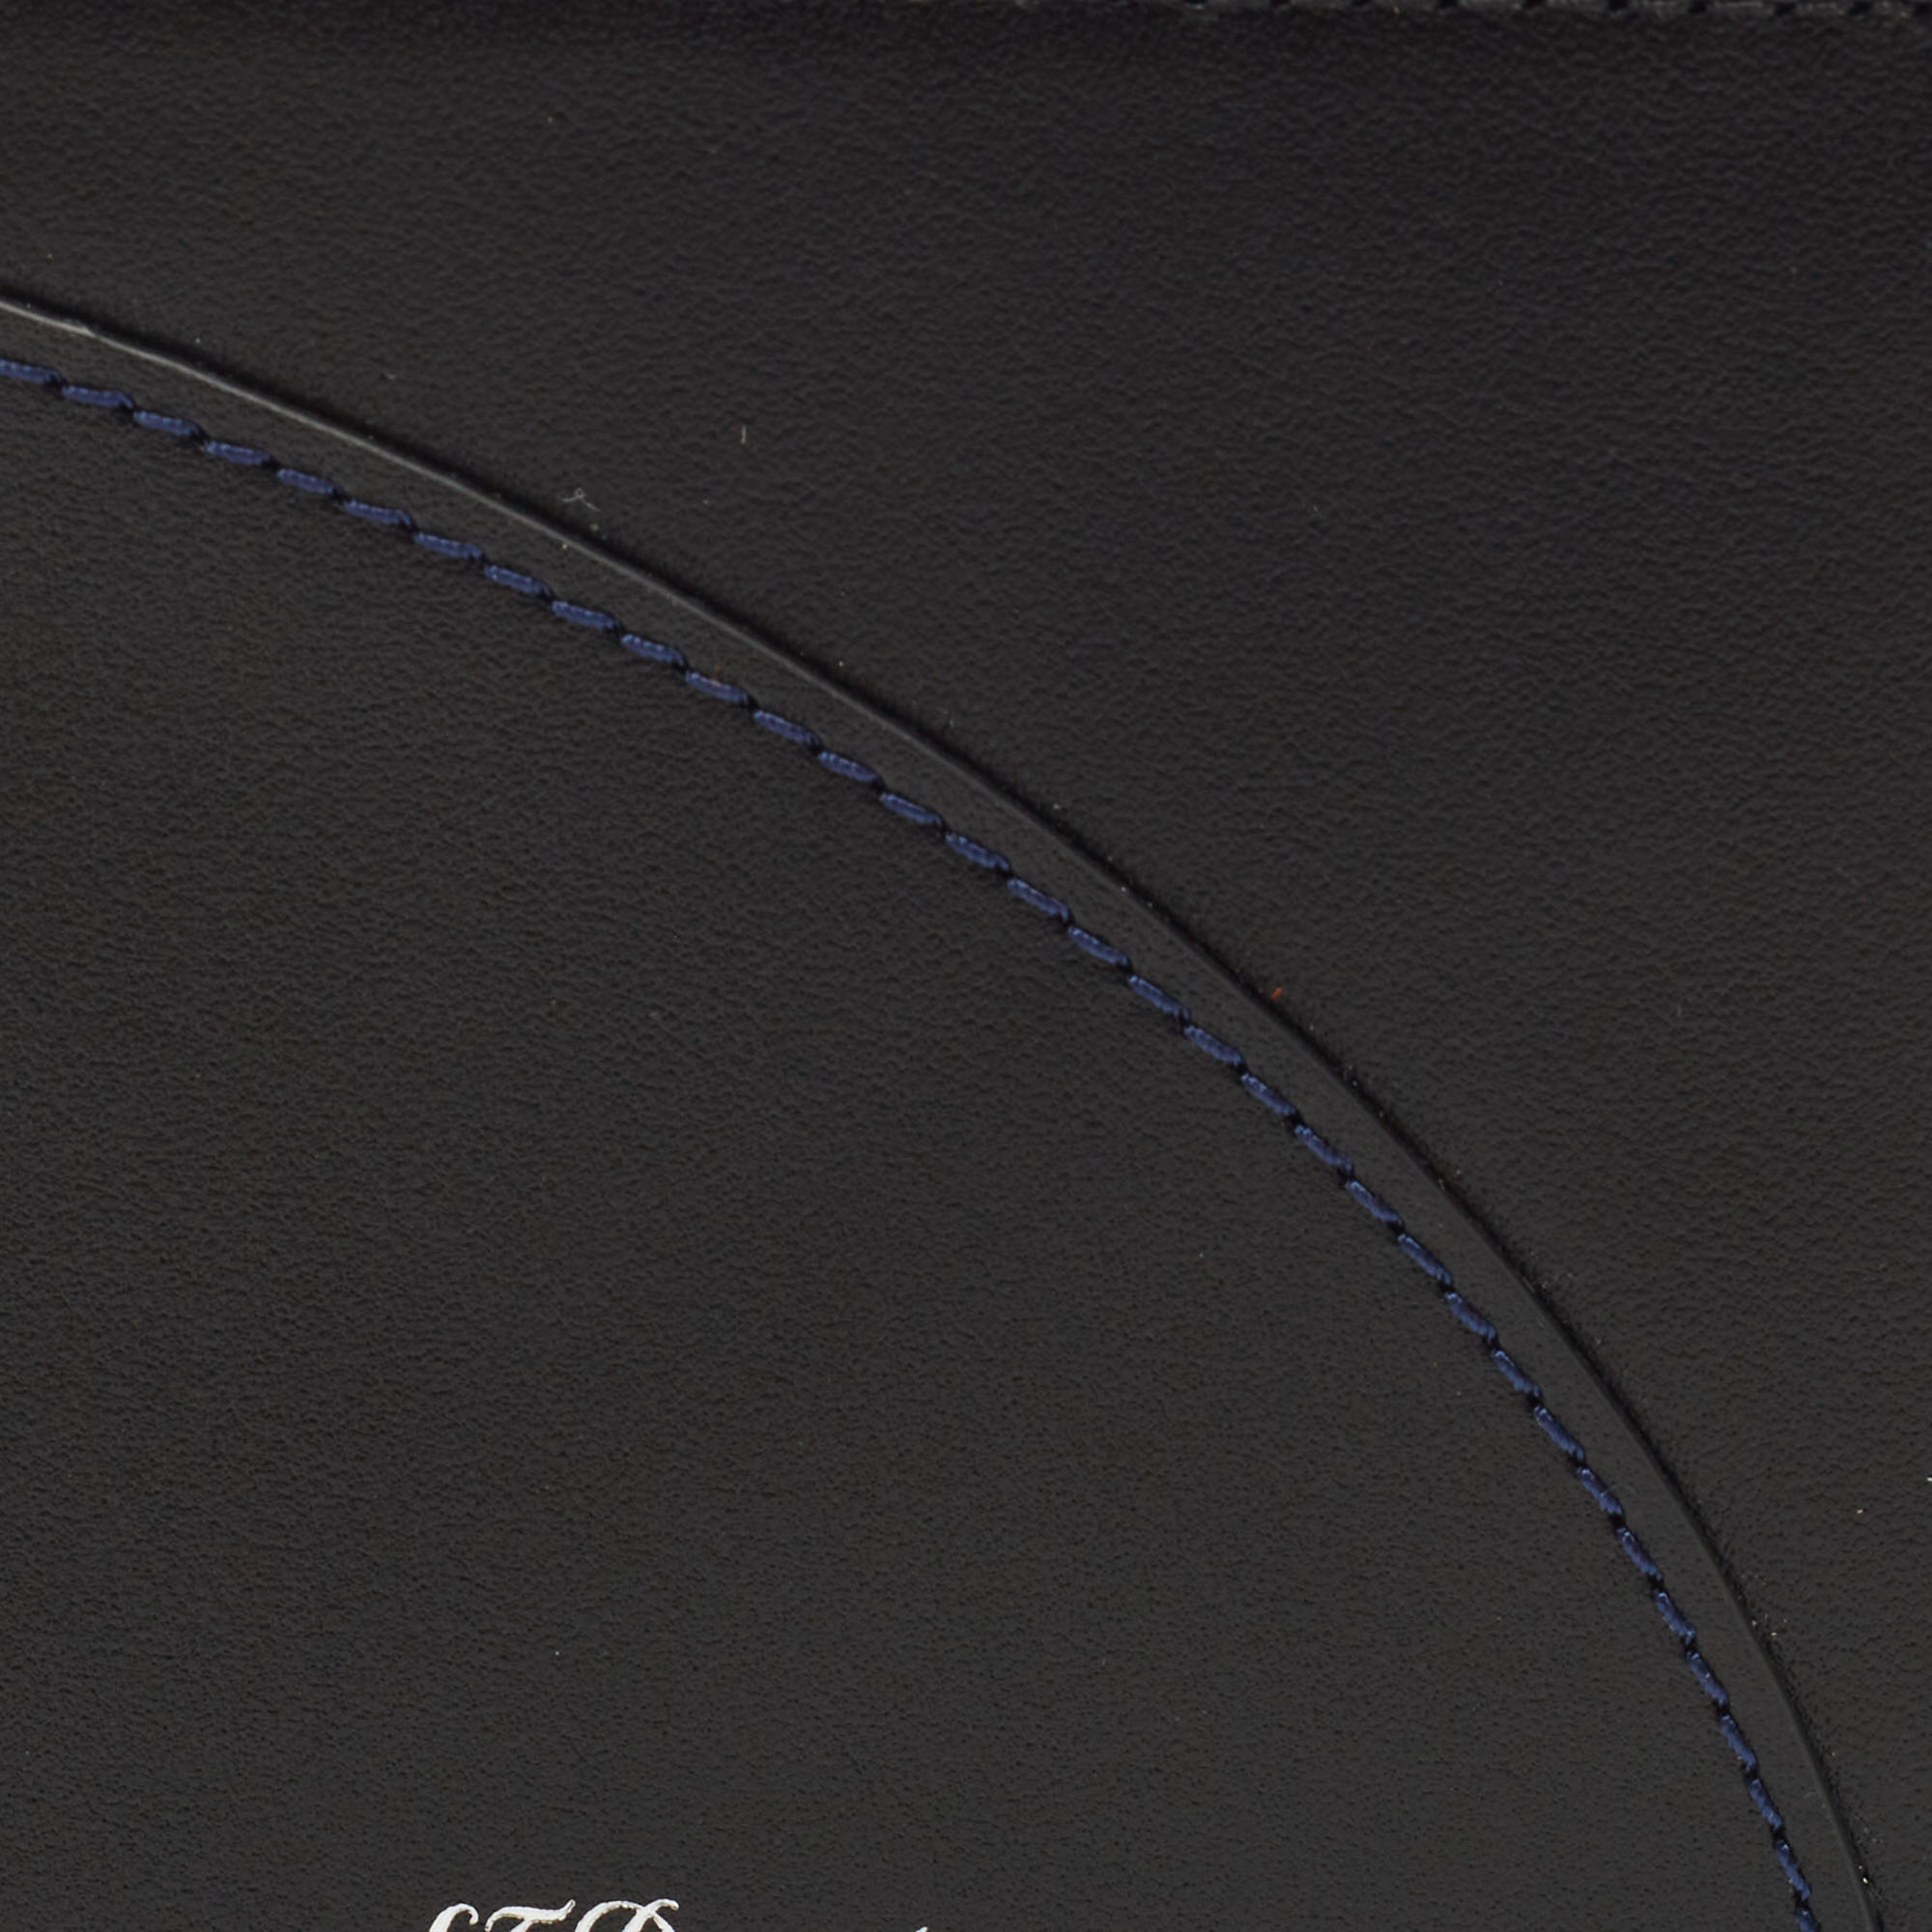 S.t. Dupont Black Leather 8CC Billfold Wallet